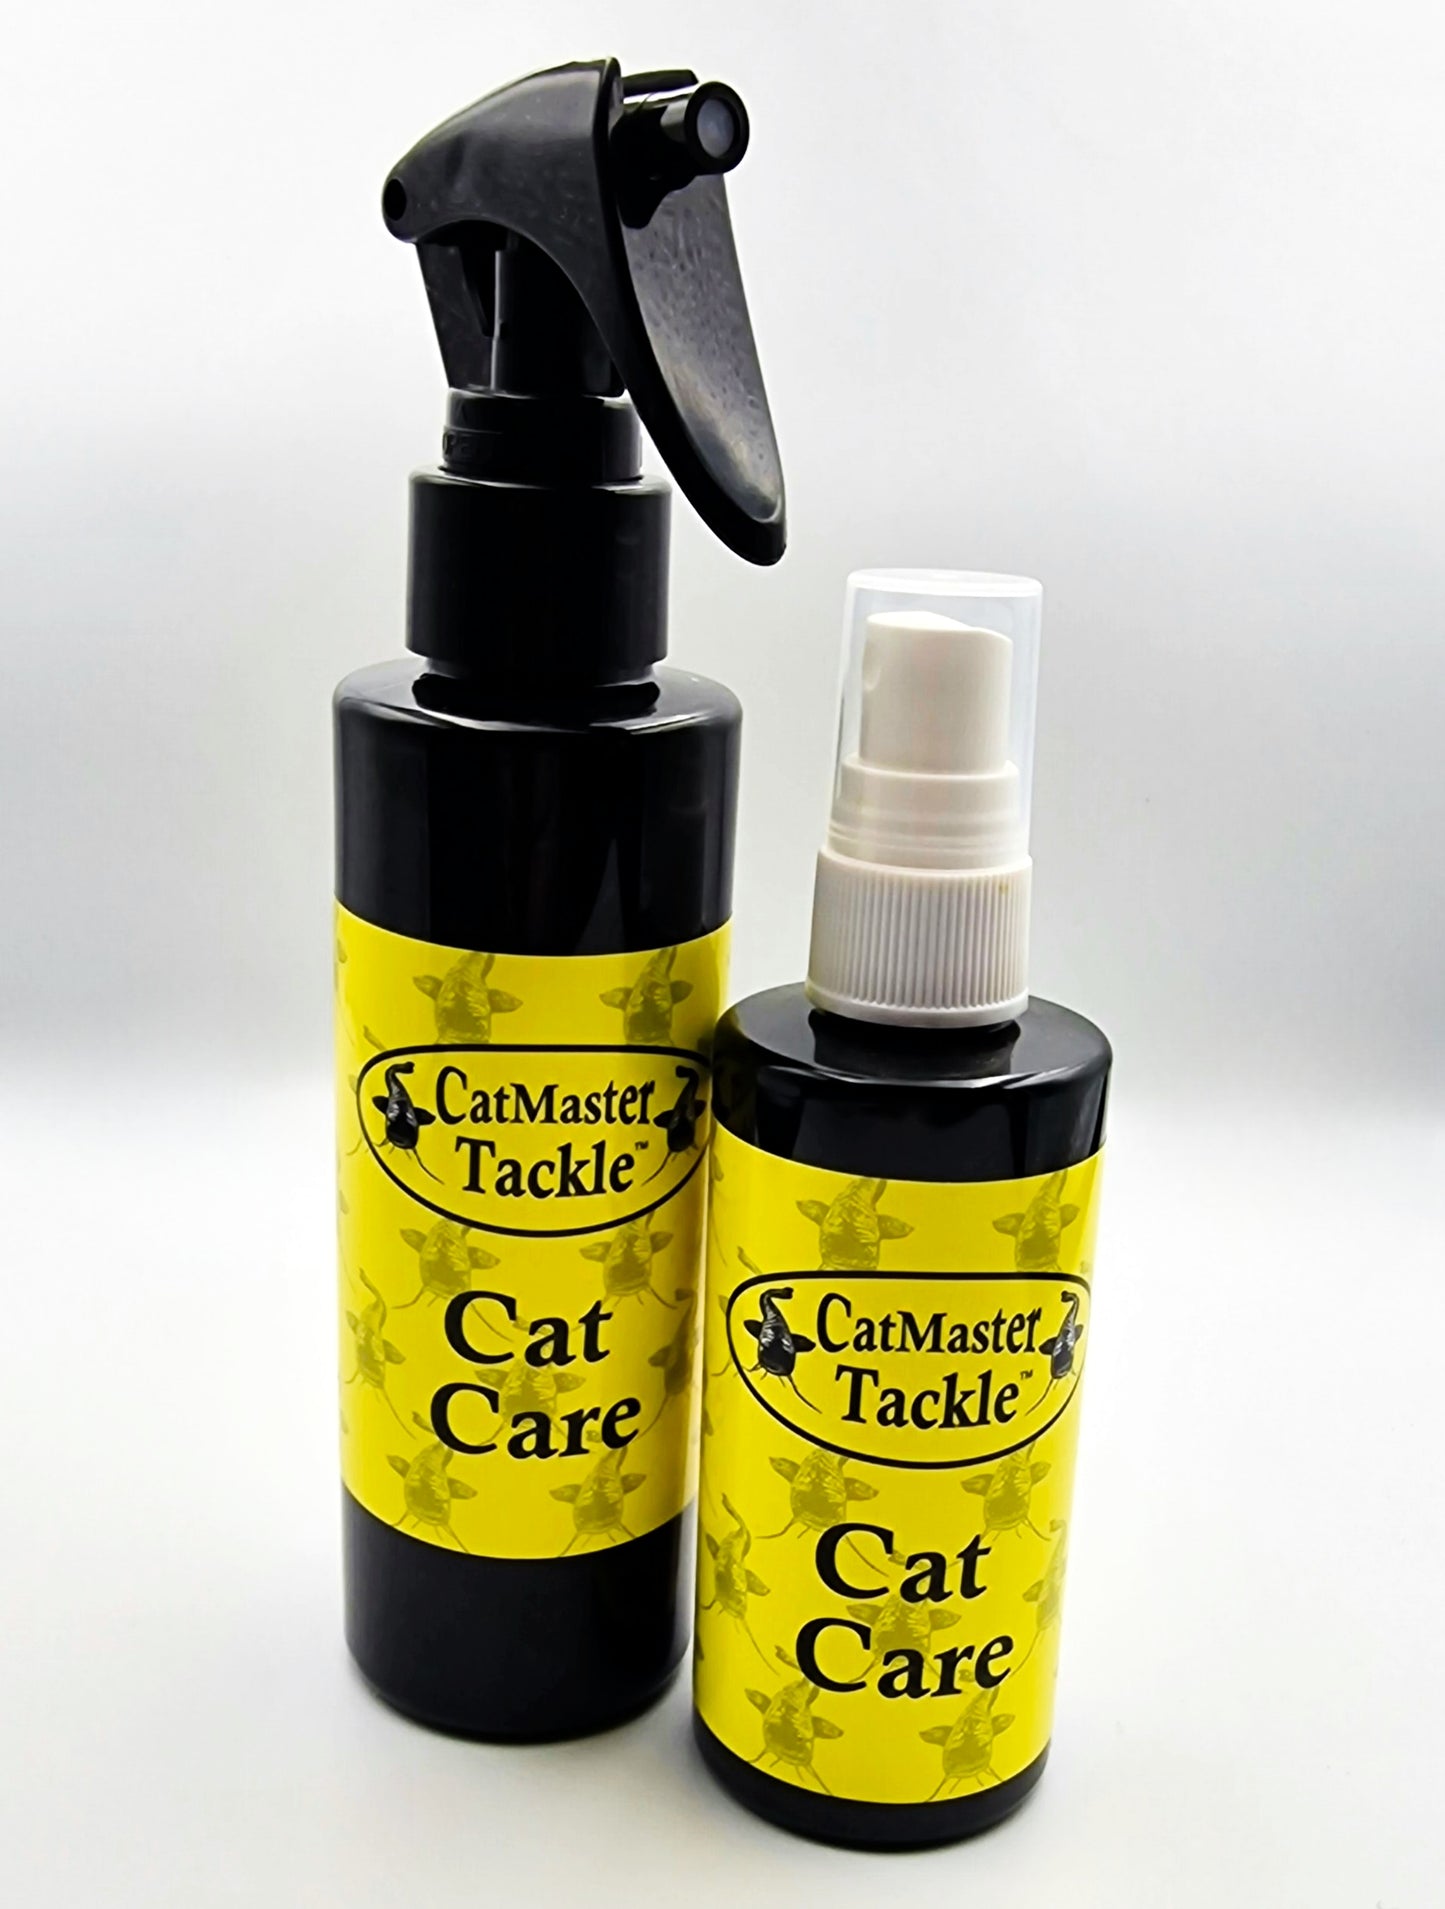 CatMaster Cat Care